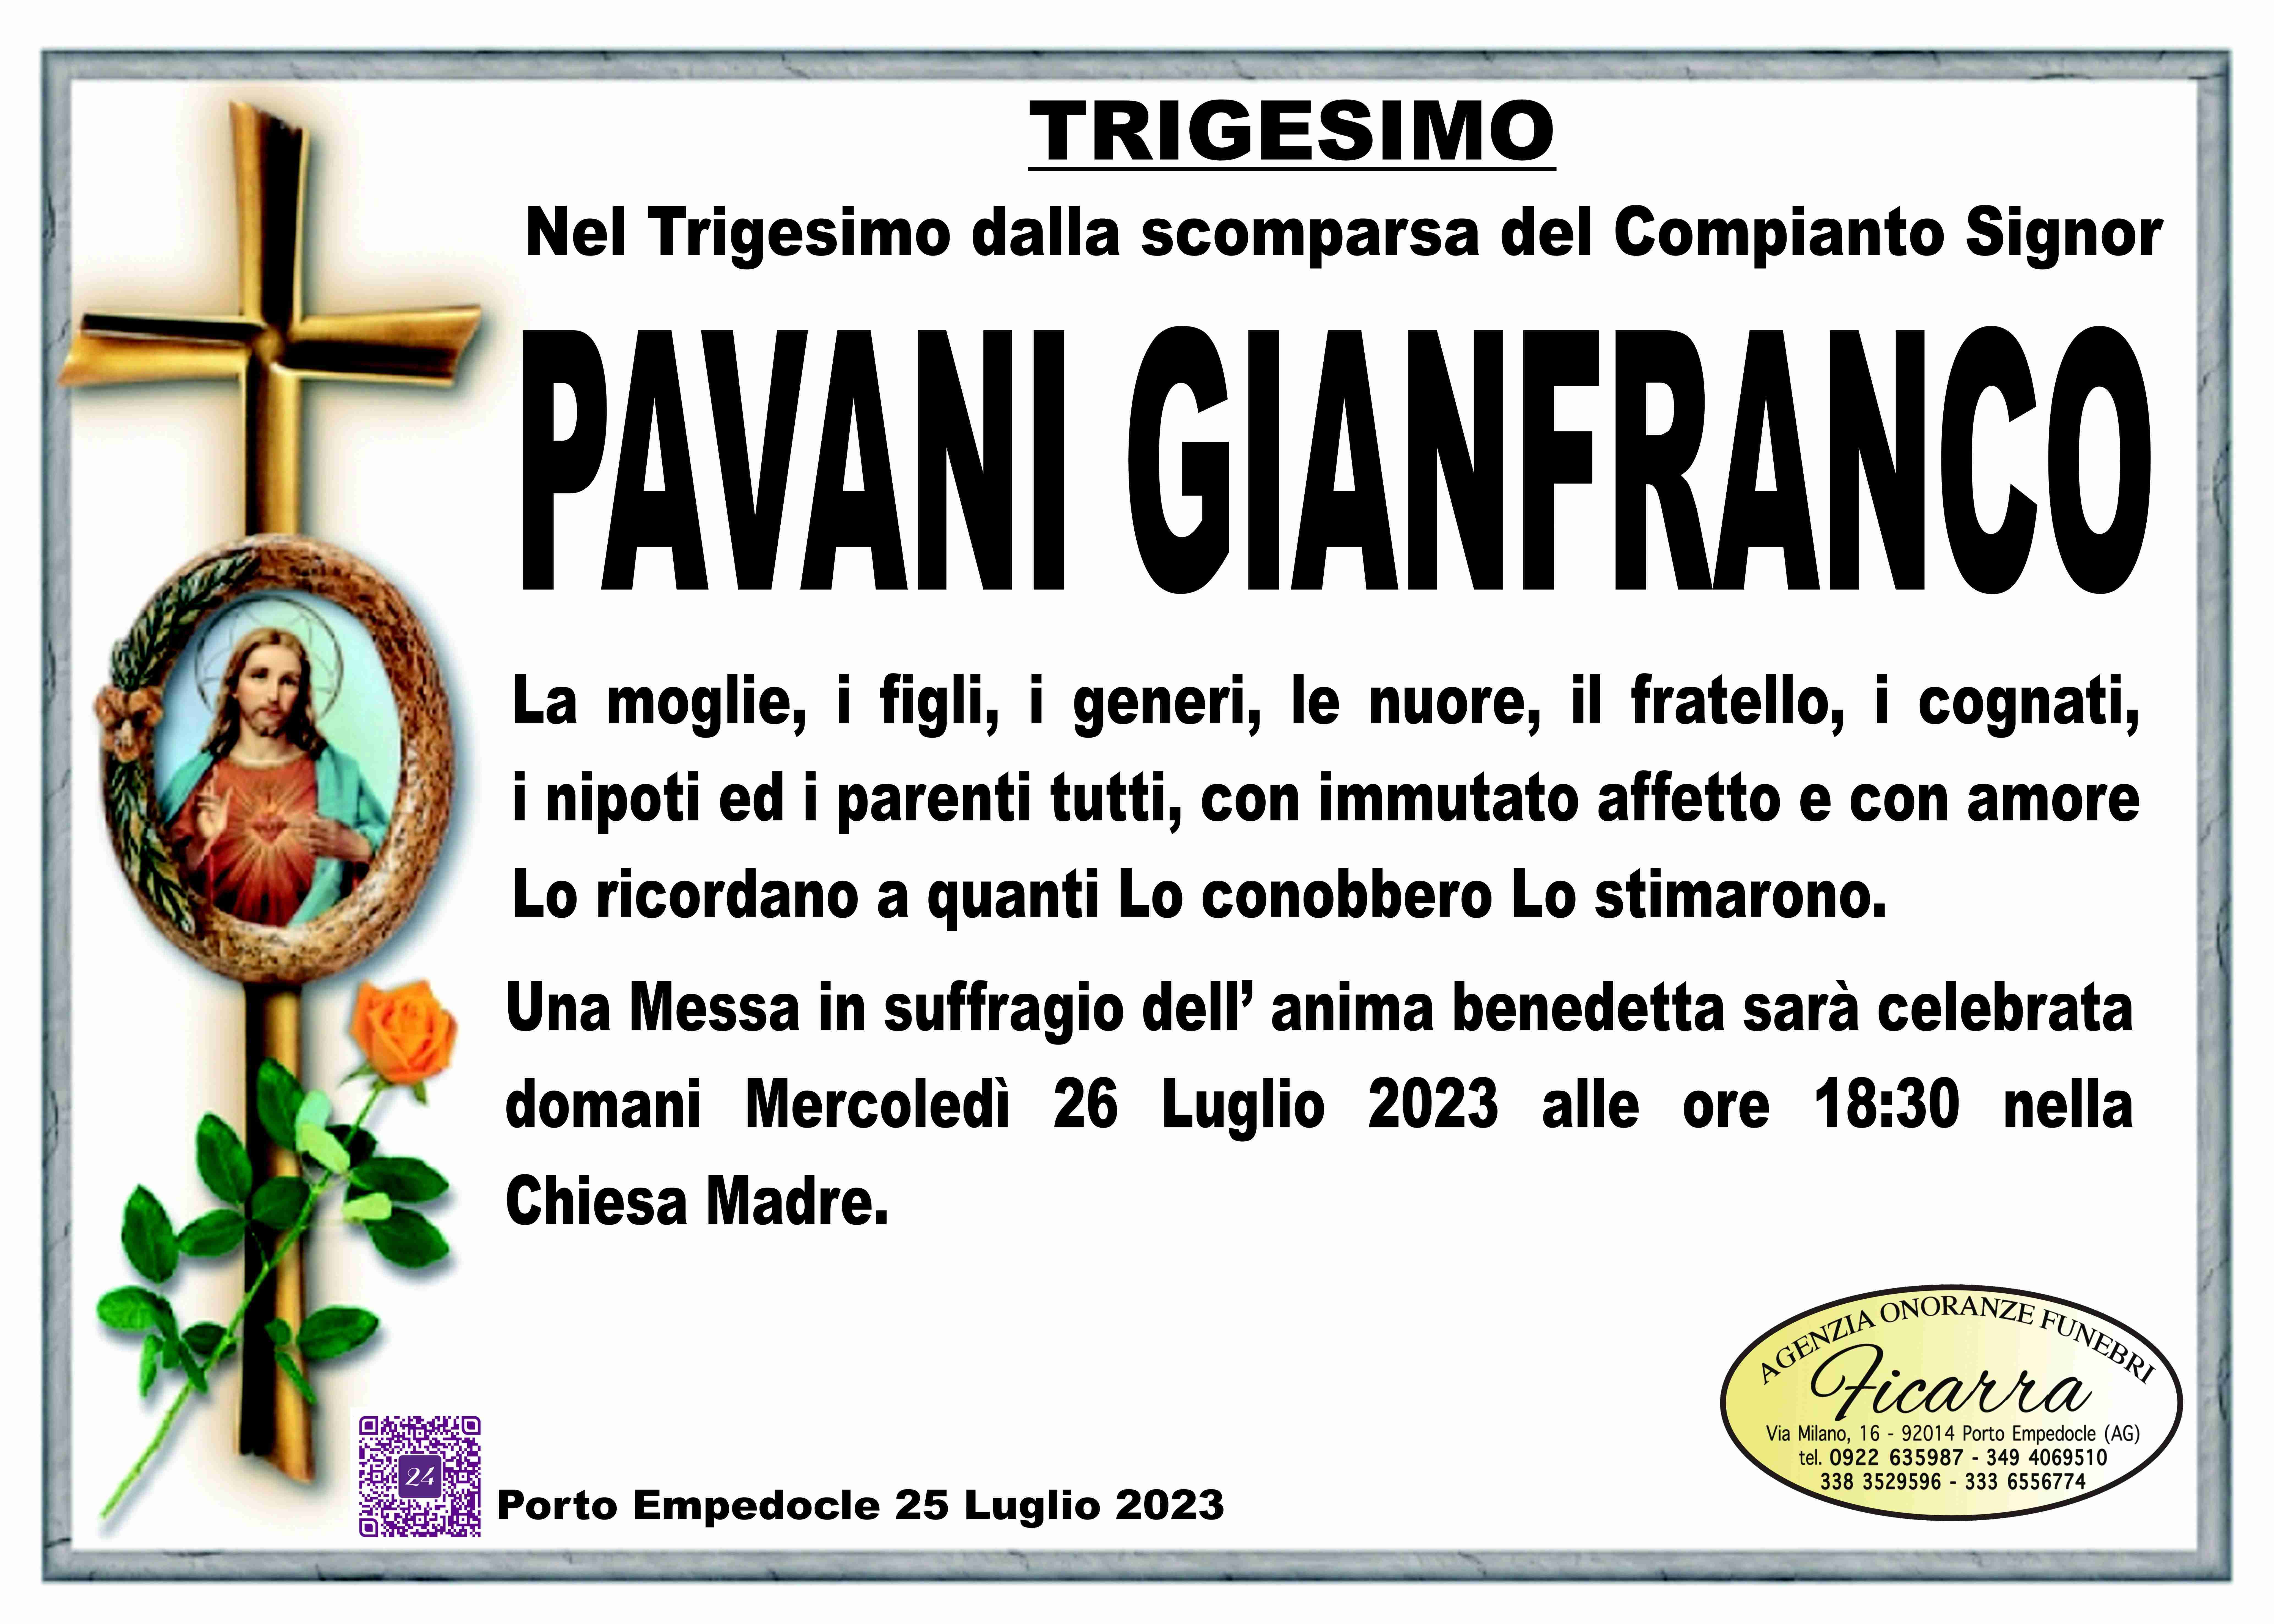 Gianfranco Pavani